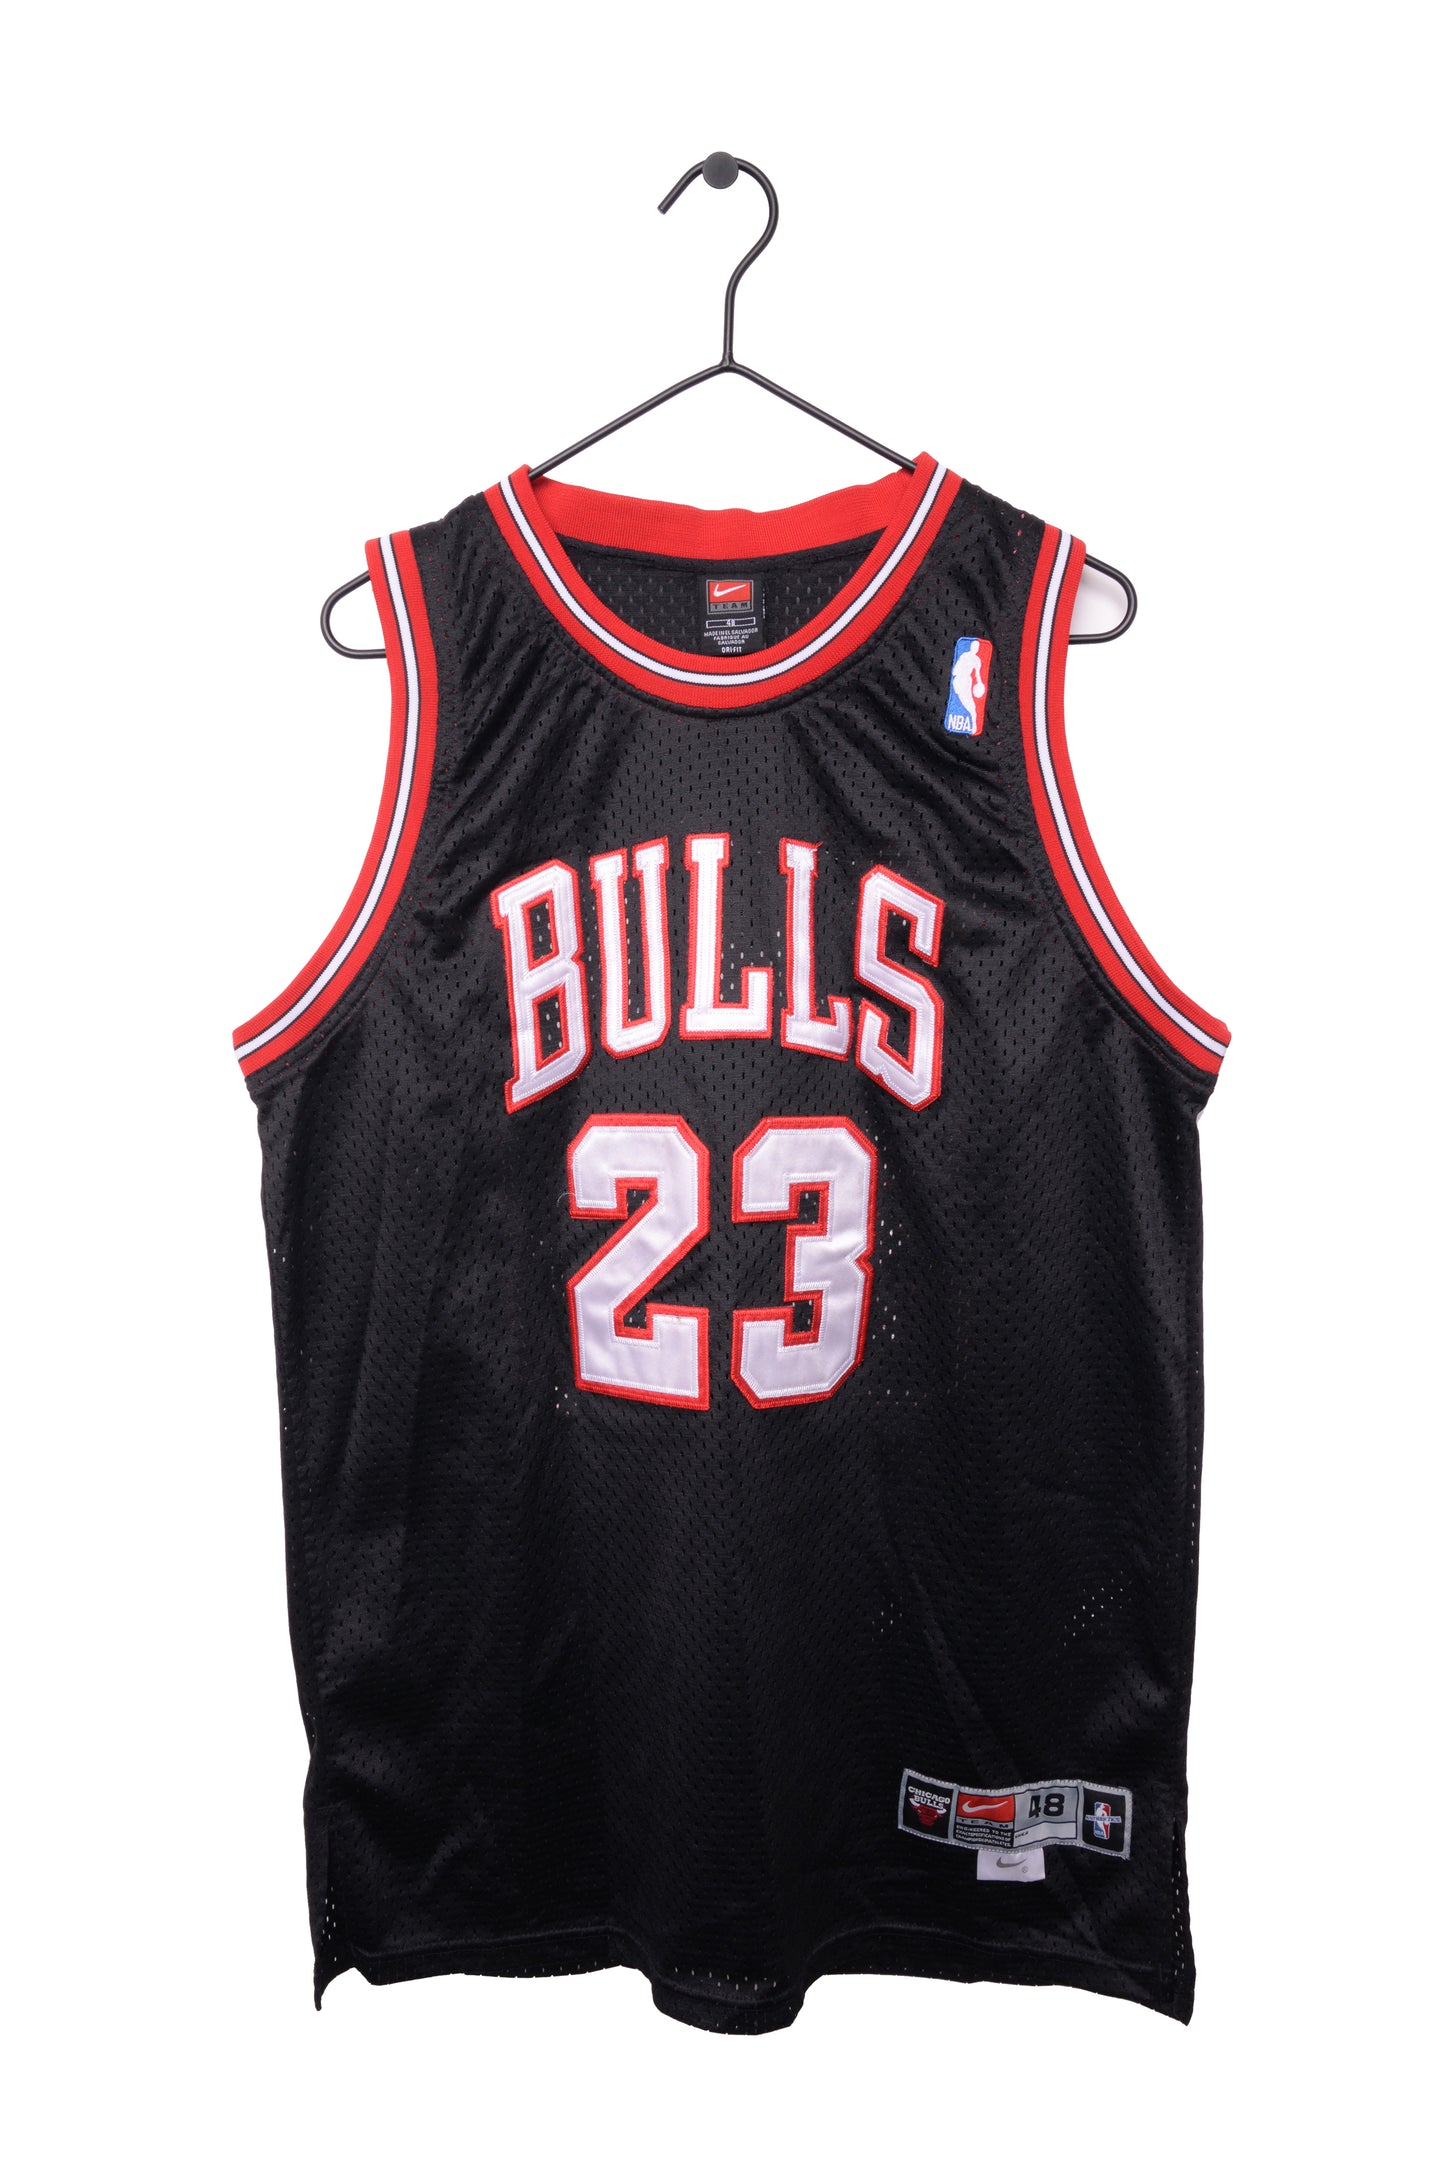 1997 Michael Jordan Chicago Bulls Jersey